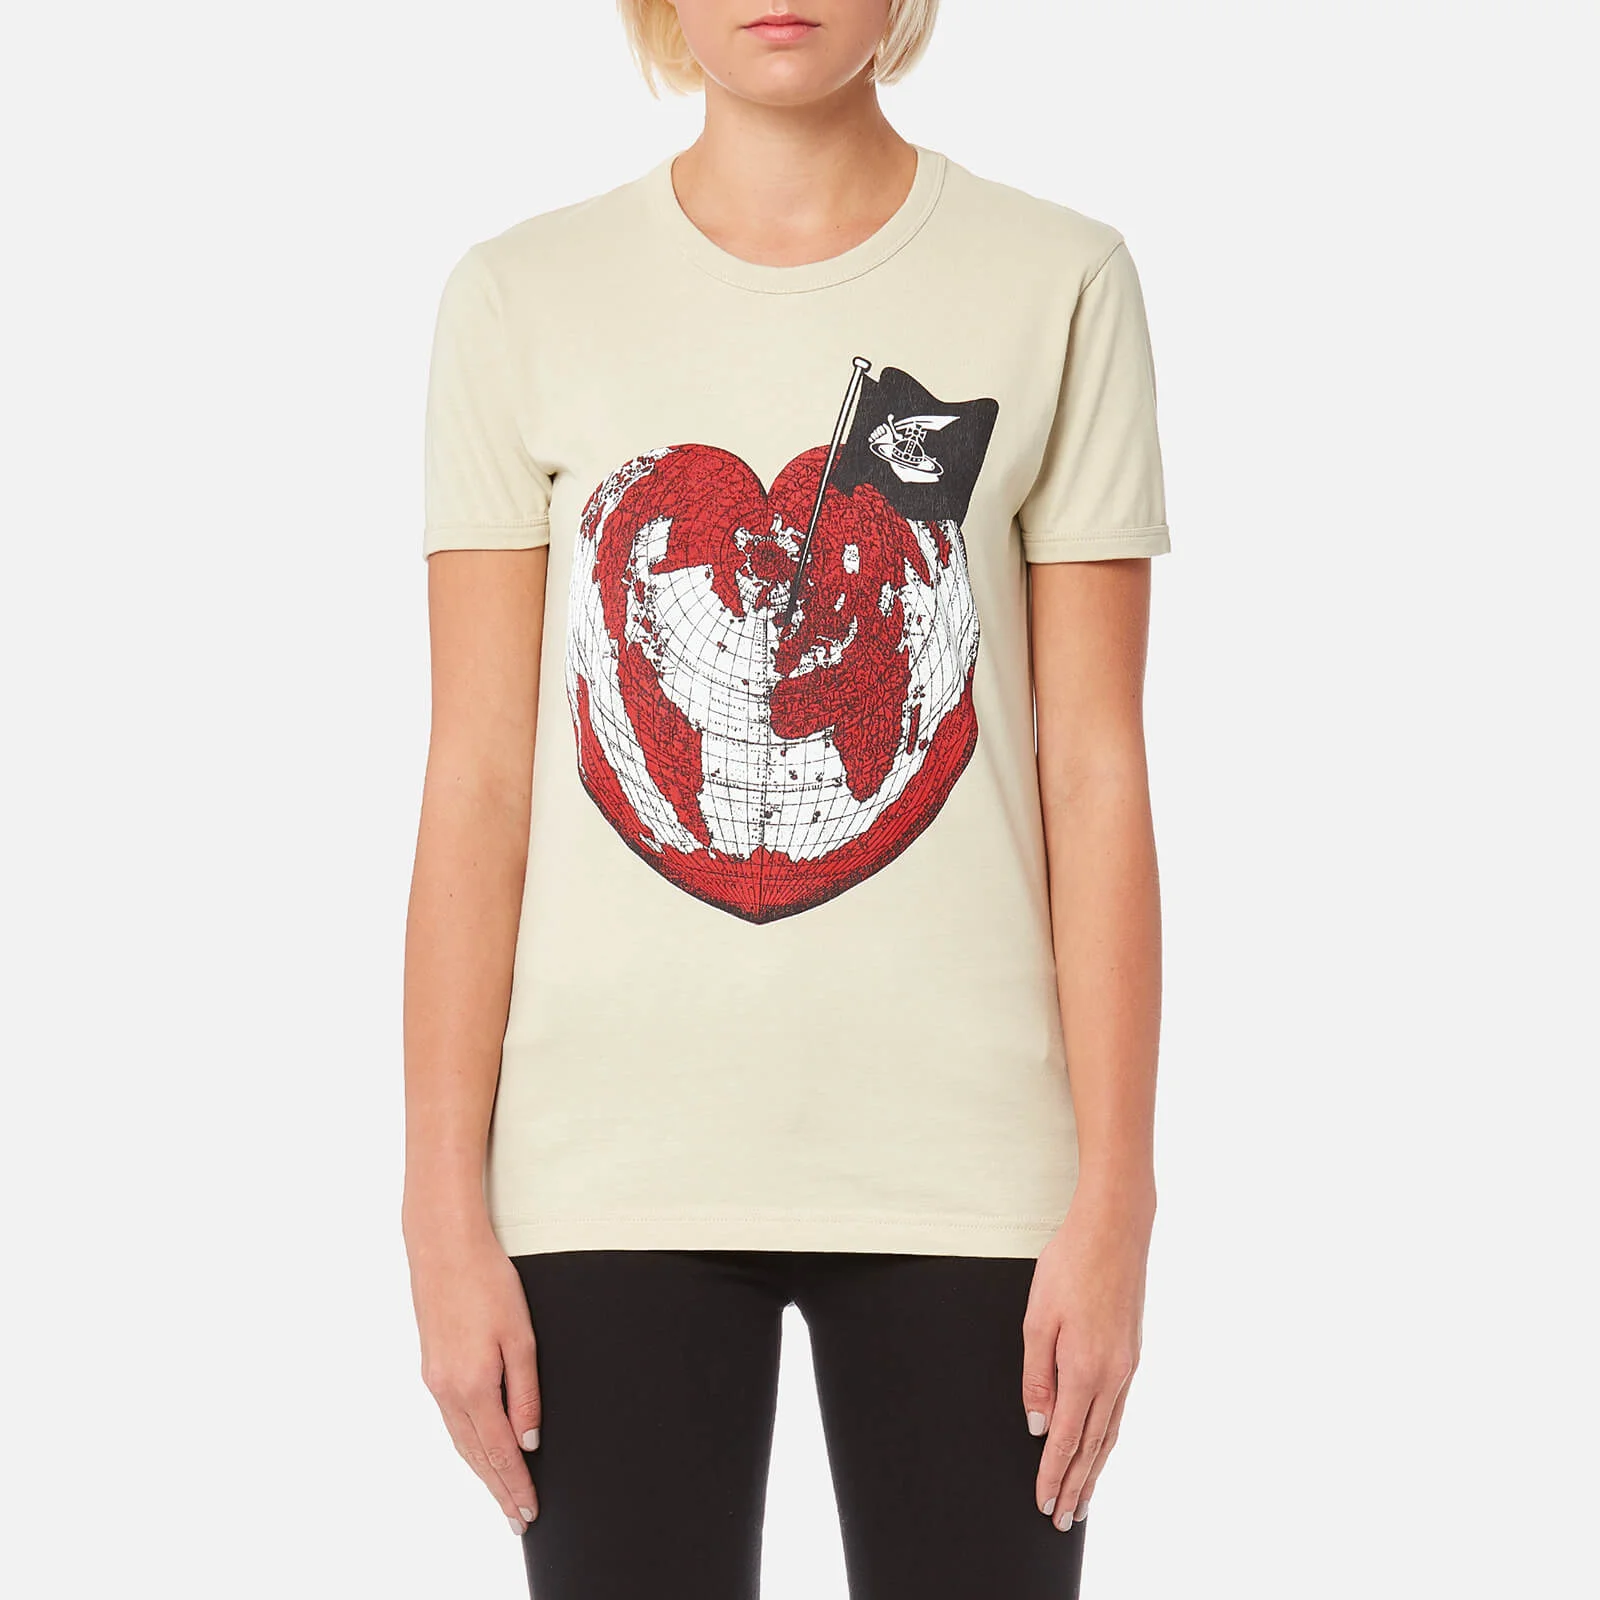 Vivienne Westwood Anglomania Women's Classic T-Shirt Heart World Print - Ocra Image 1